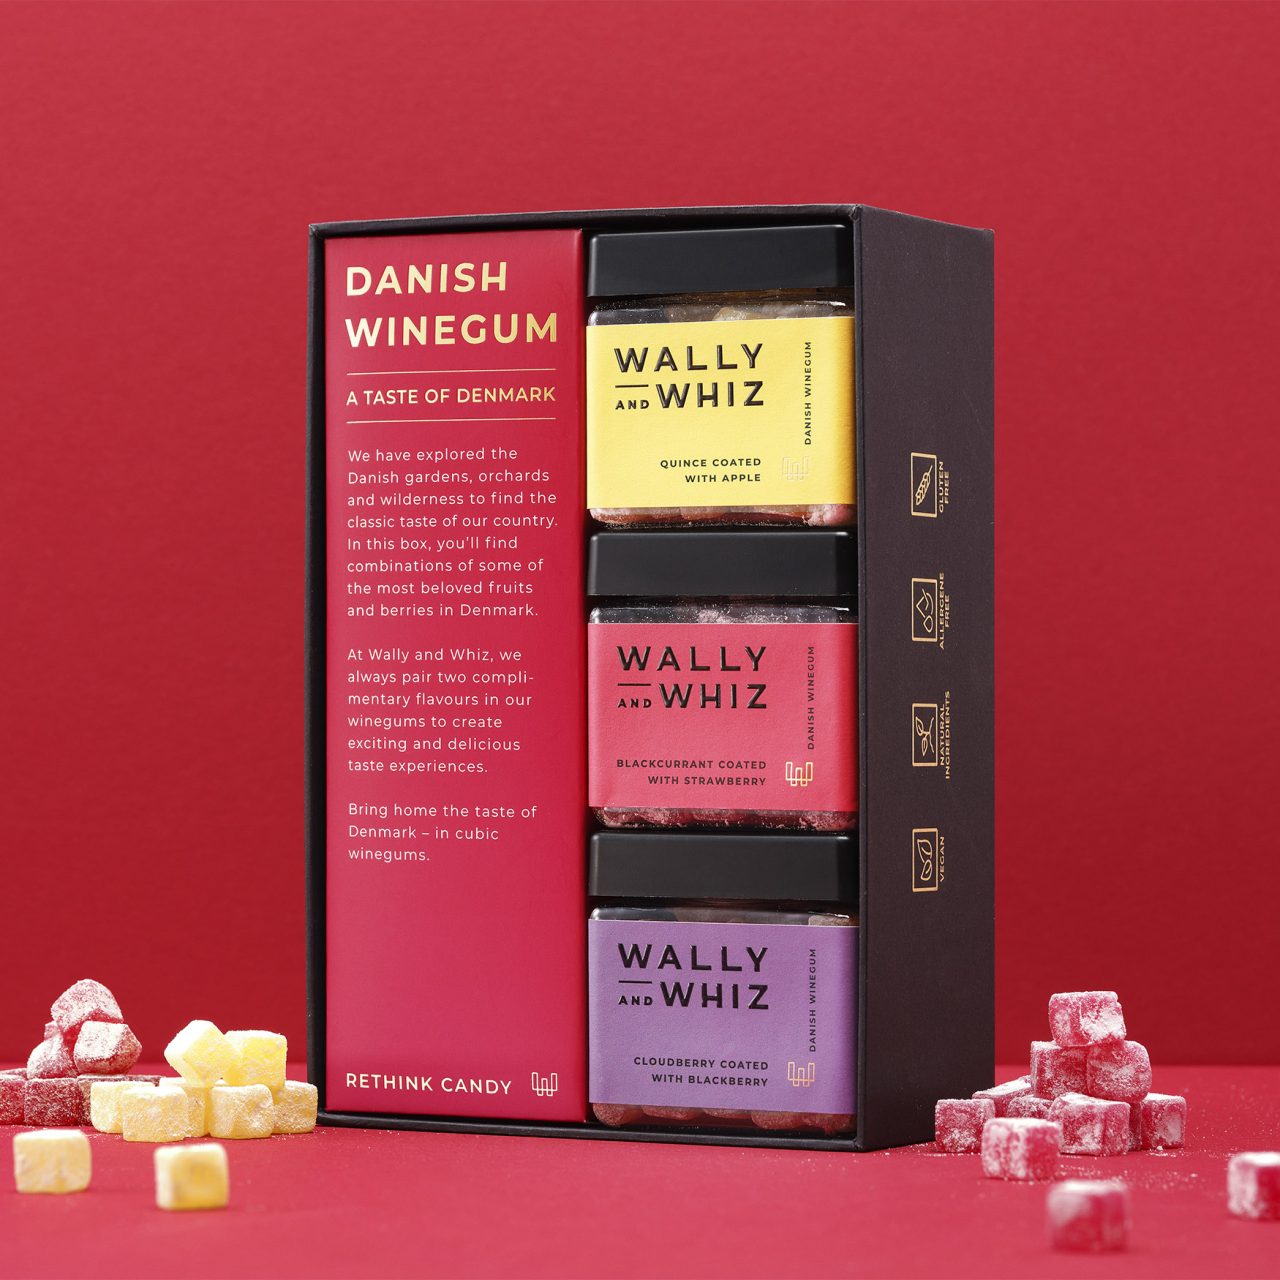 A Taste of Denmark_Wally and Whiz_Danish winegum_1-1